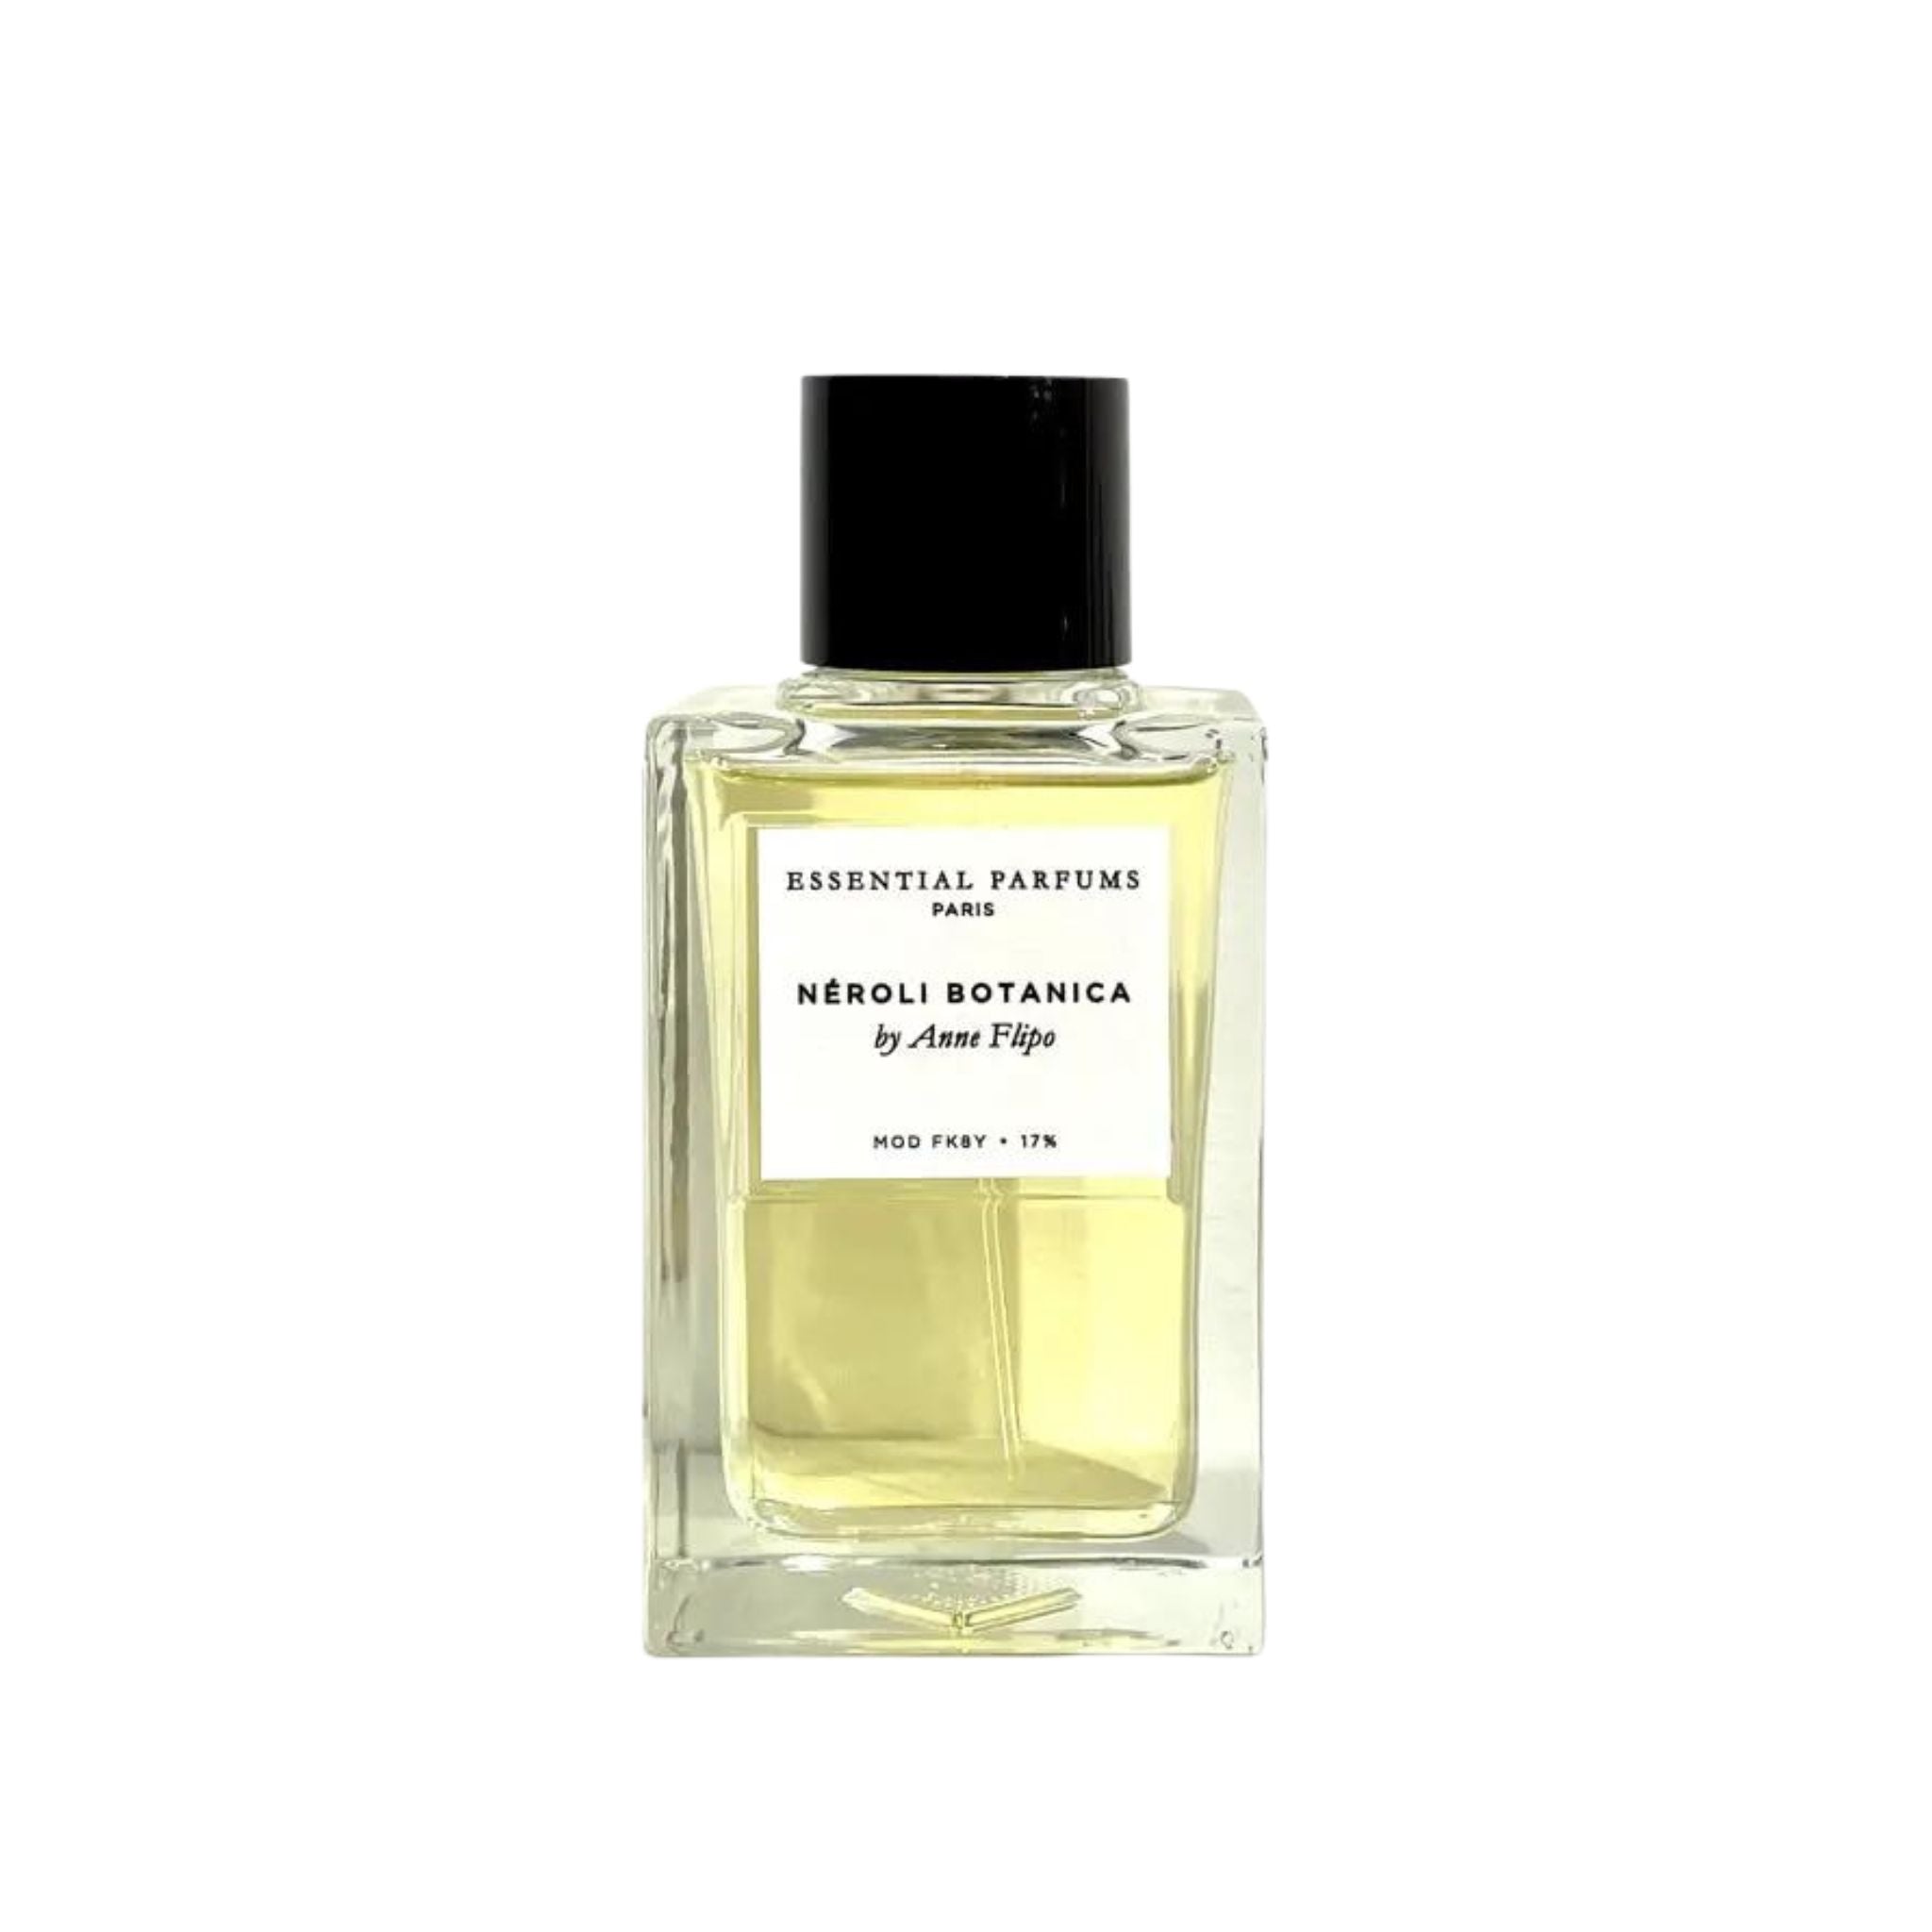 Essential Parfums Neroli Botanica (6)